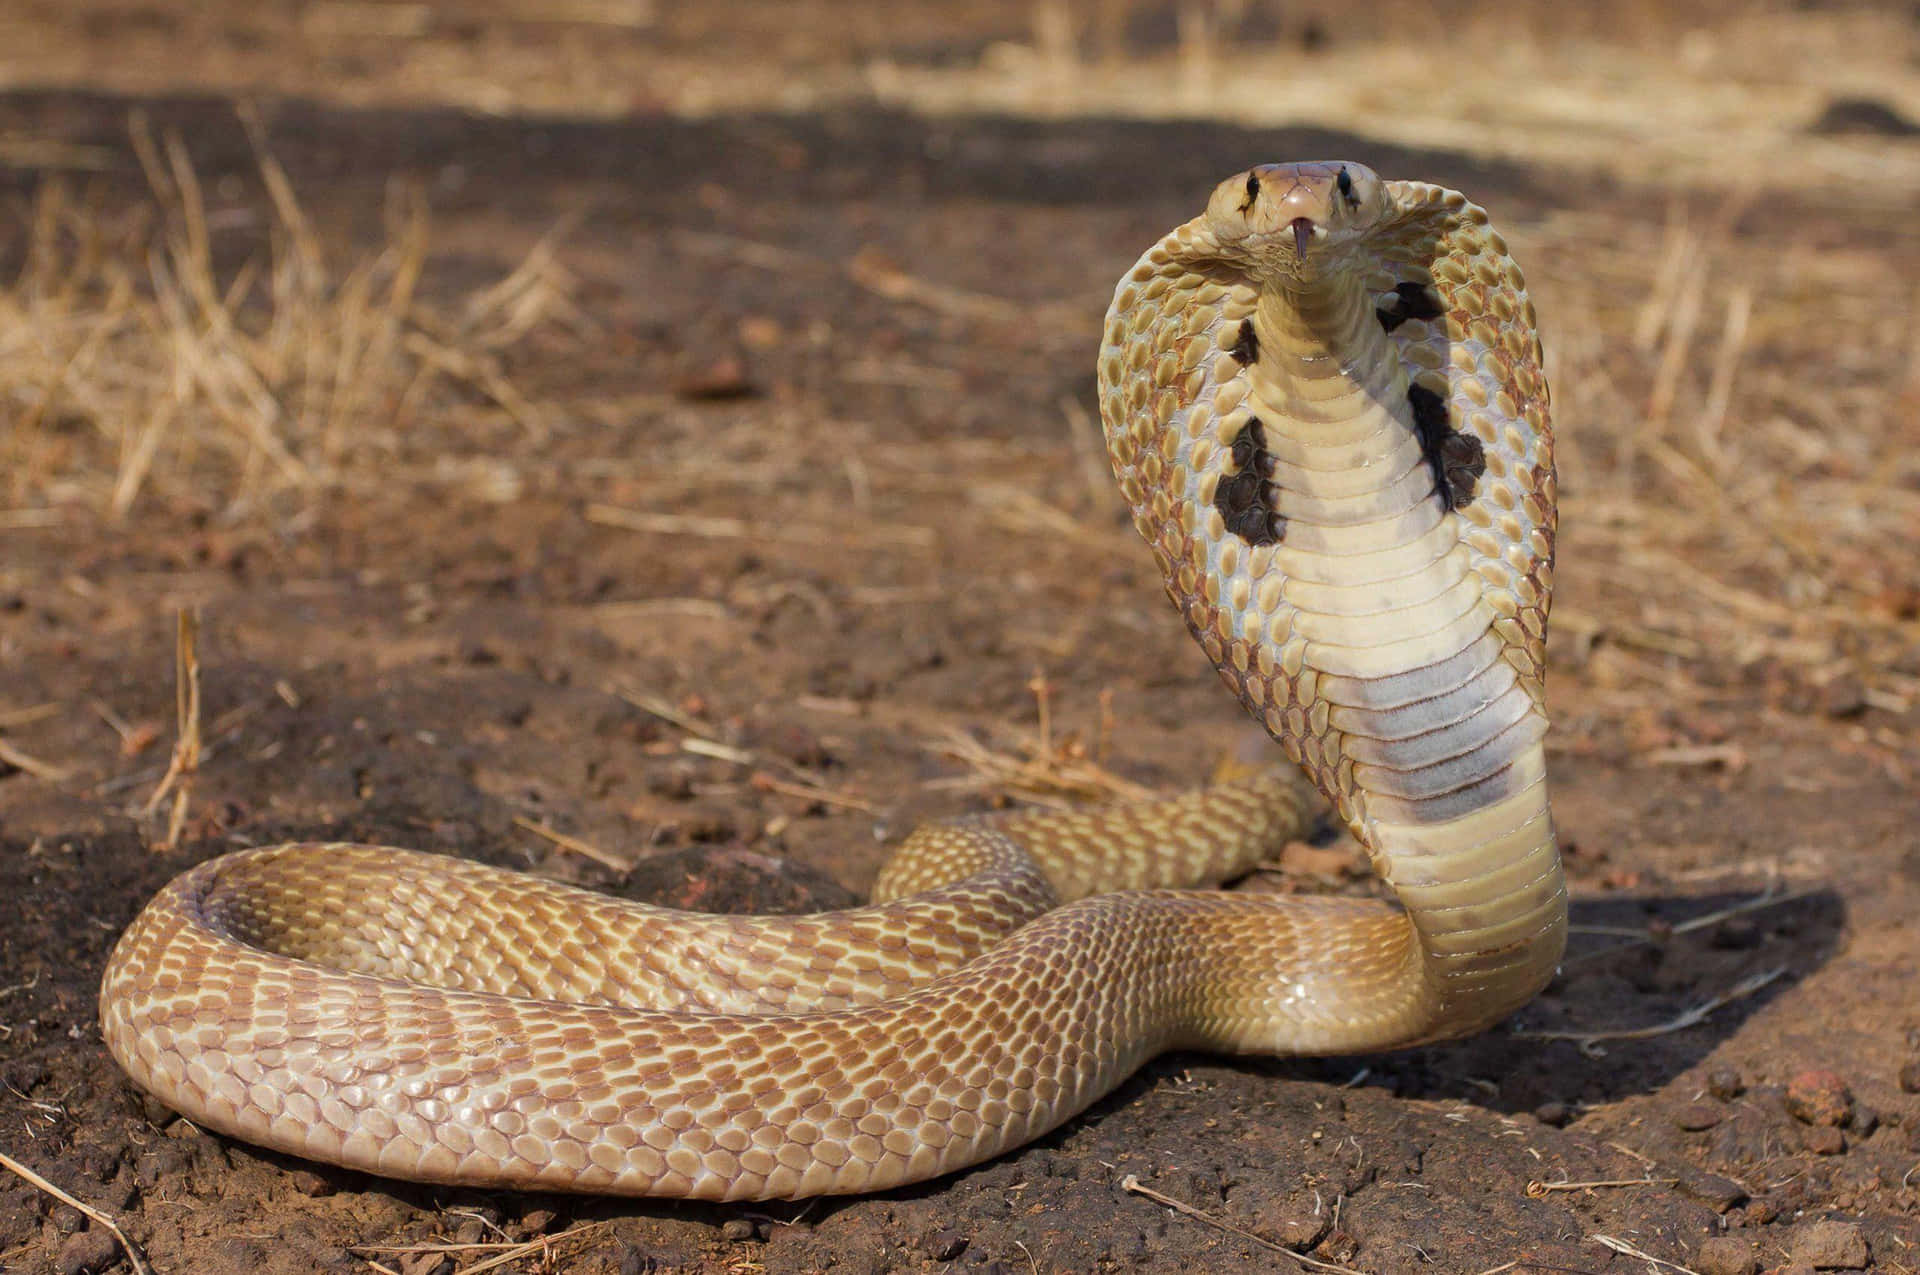 An intimidating Cobra Snake